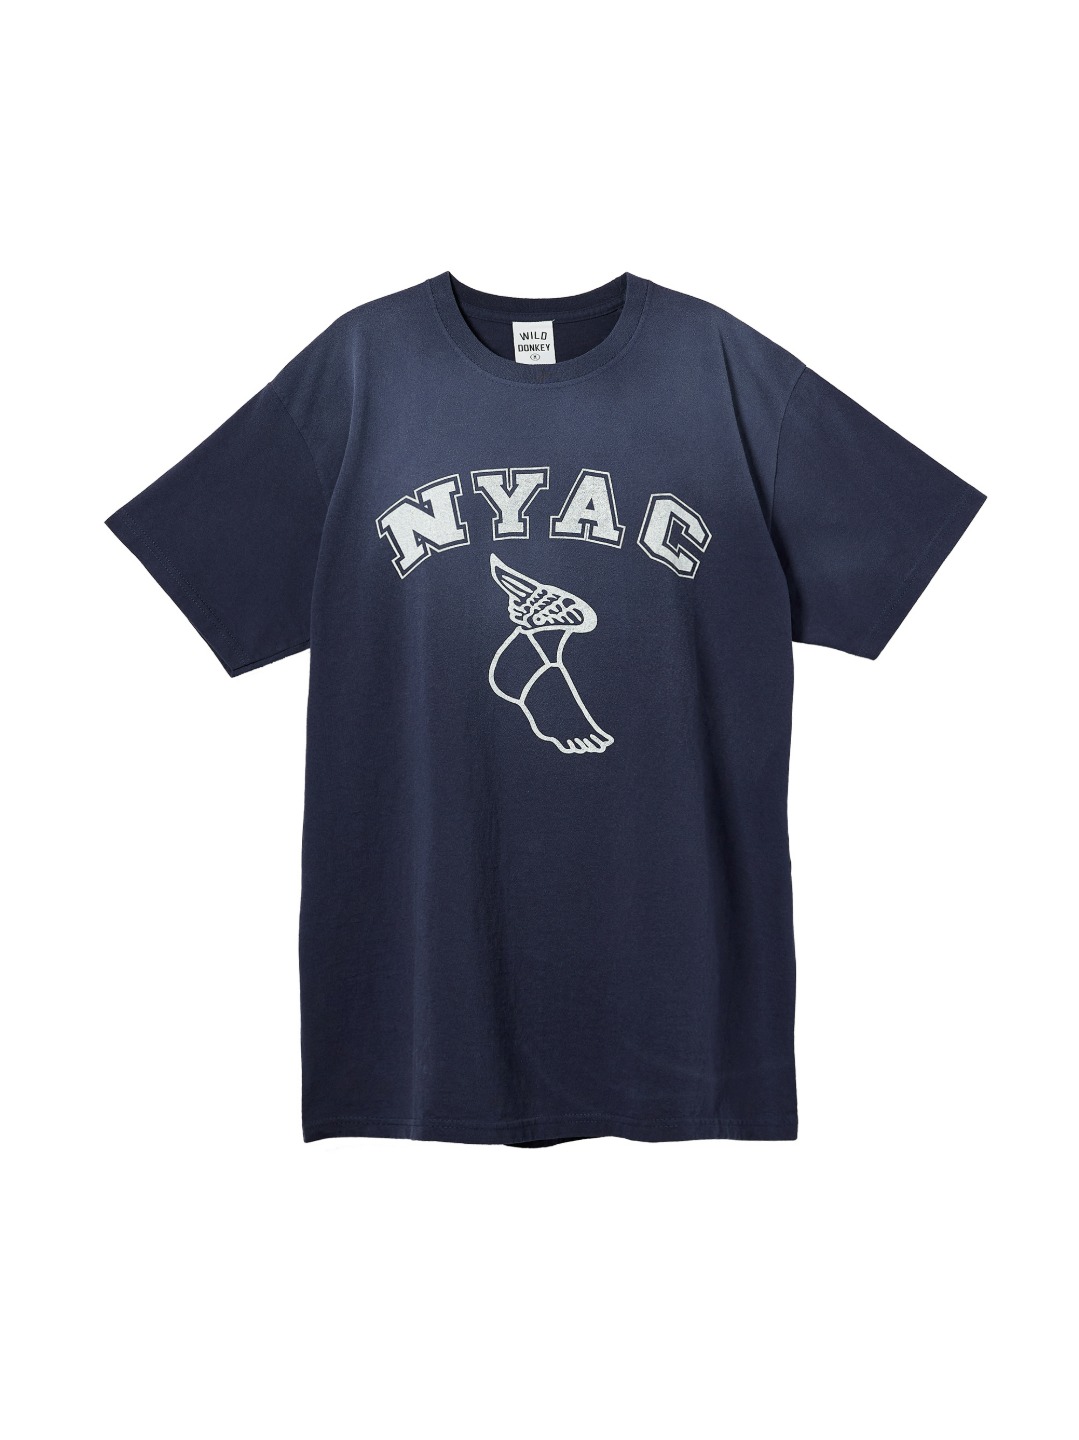 NYAC T-SHIRT / NYAC 티셔츠